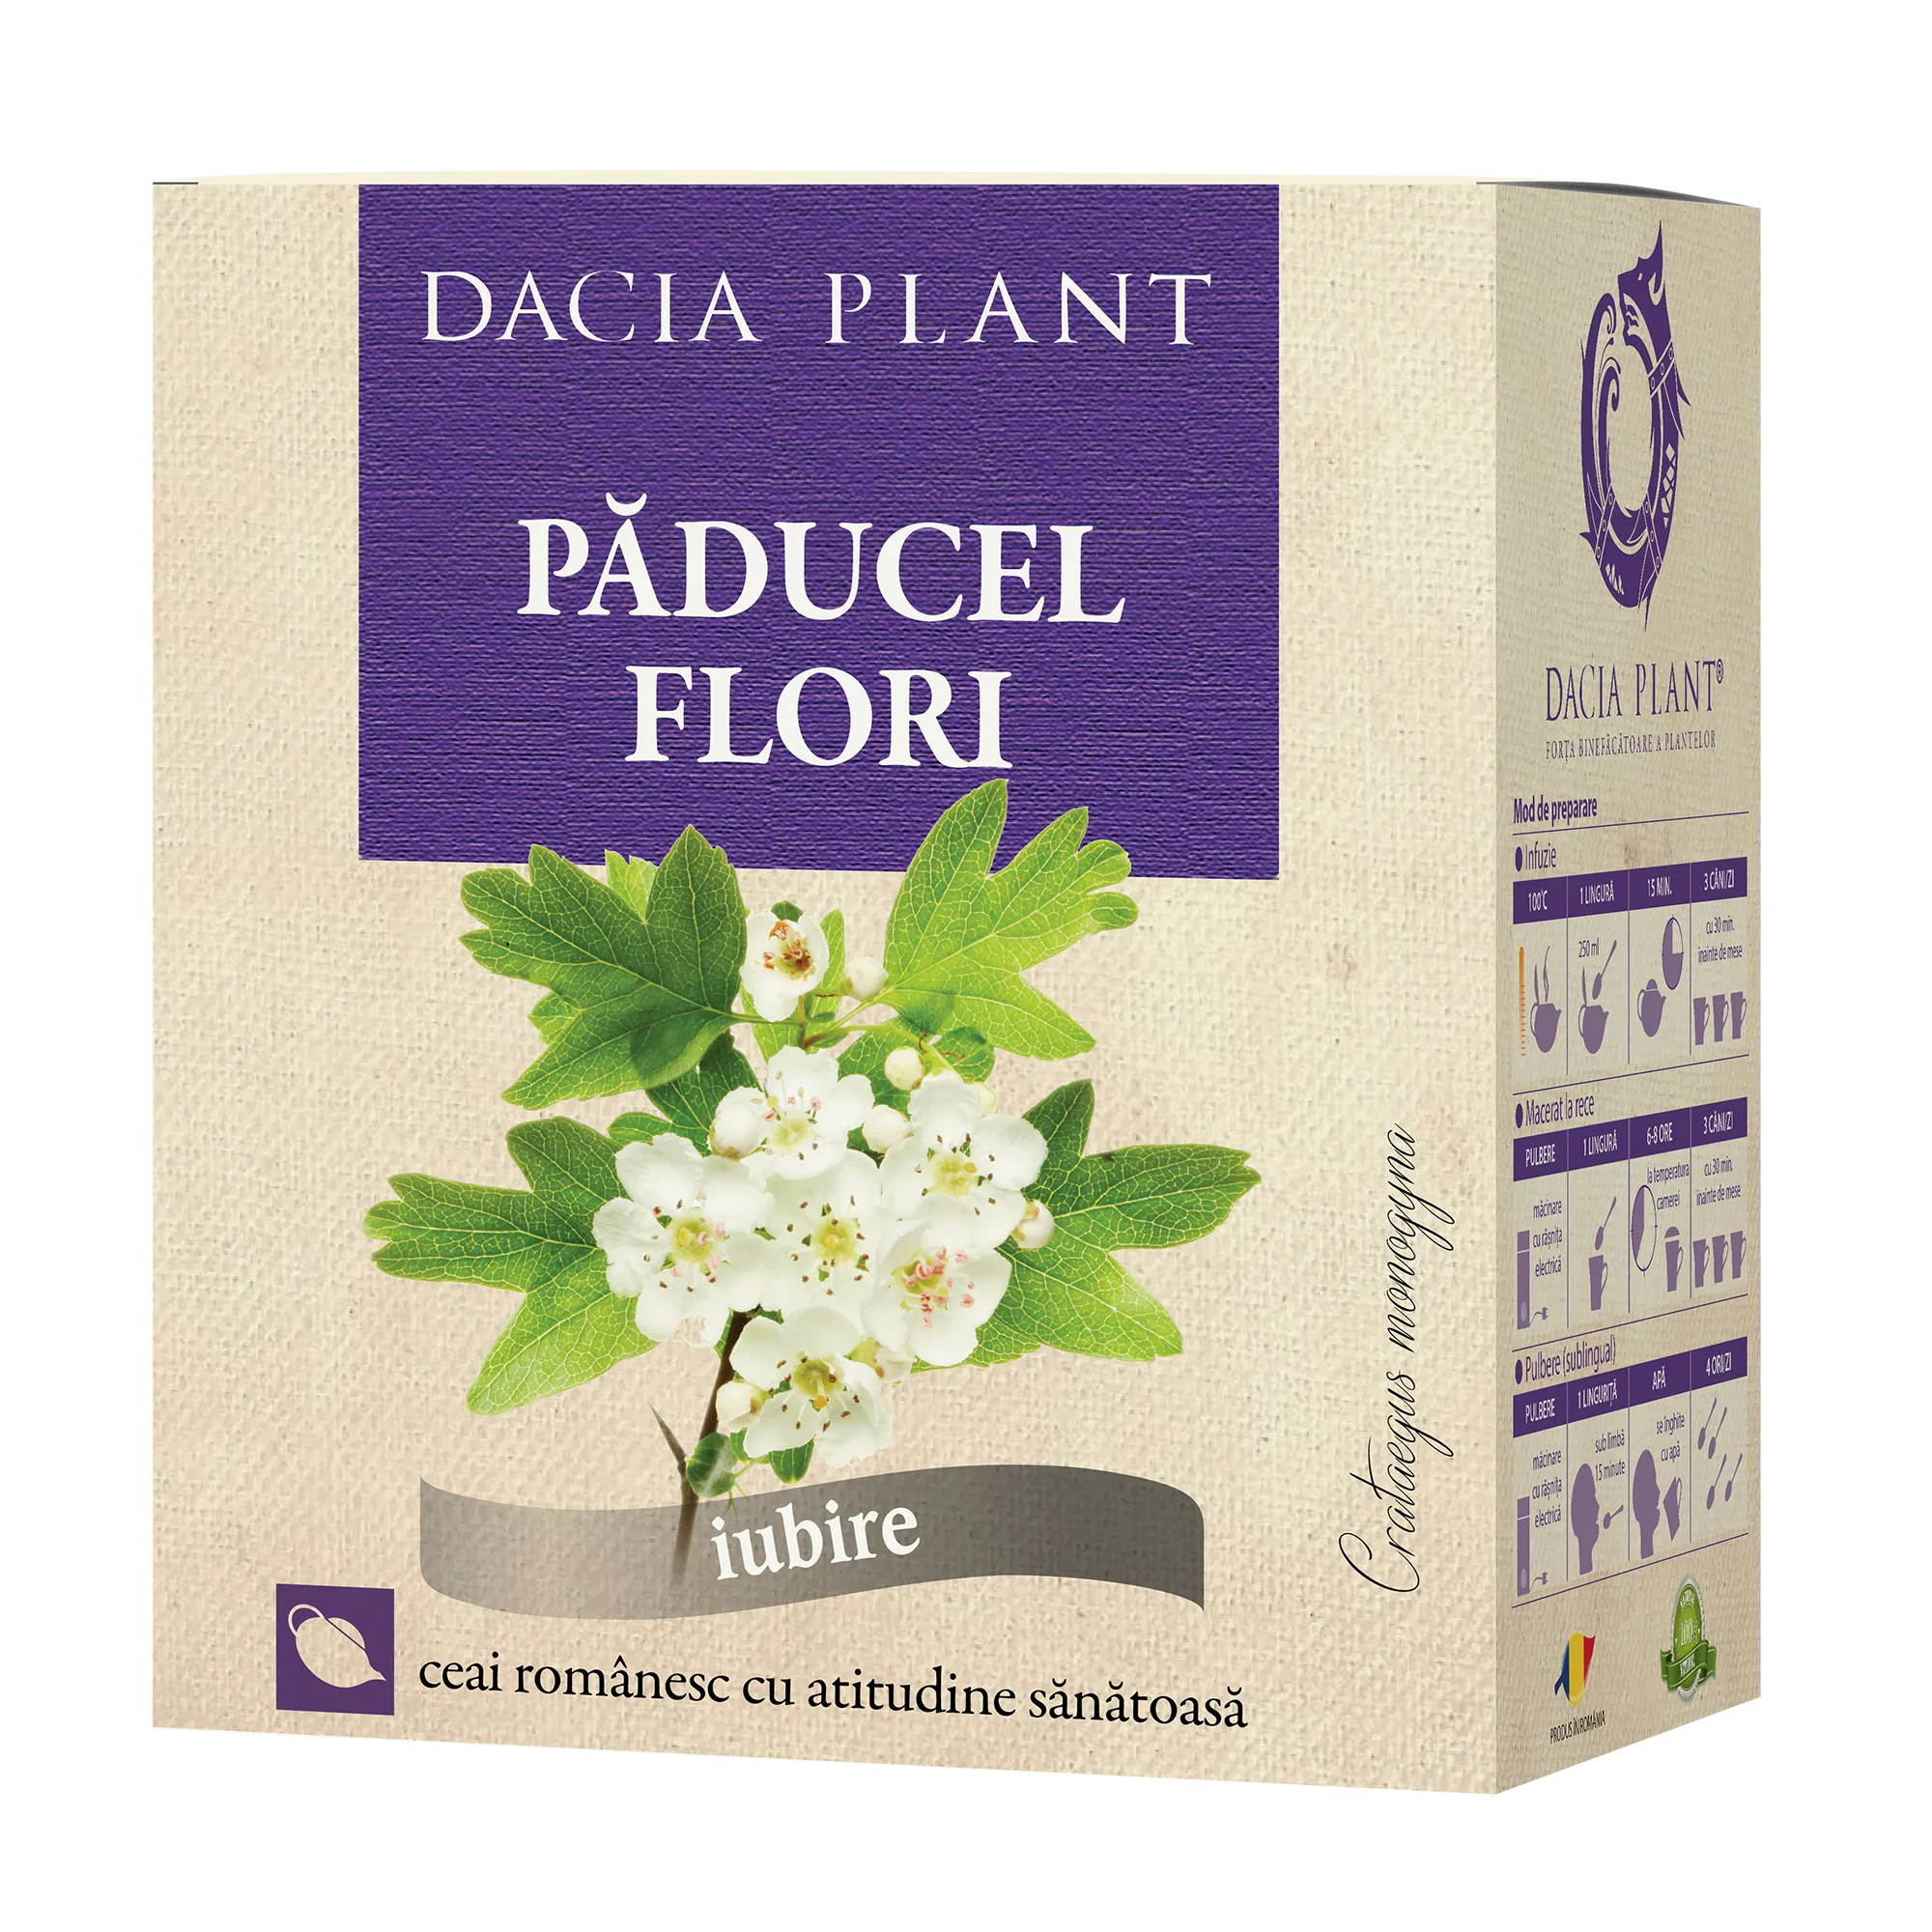 Ceai Paducel flori, 50g, Dacia Plant